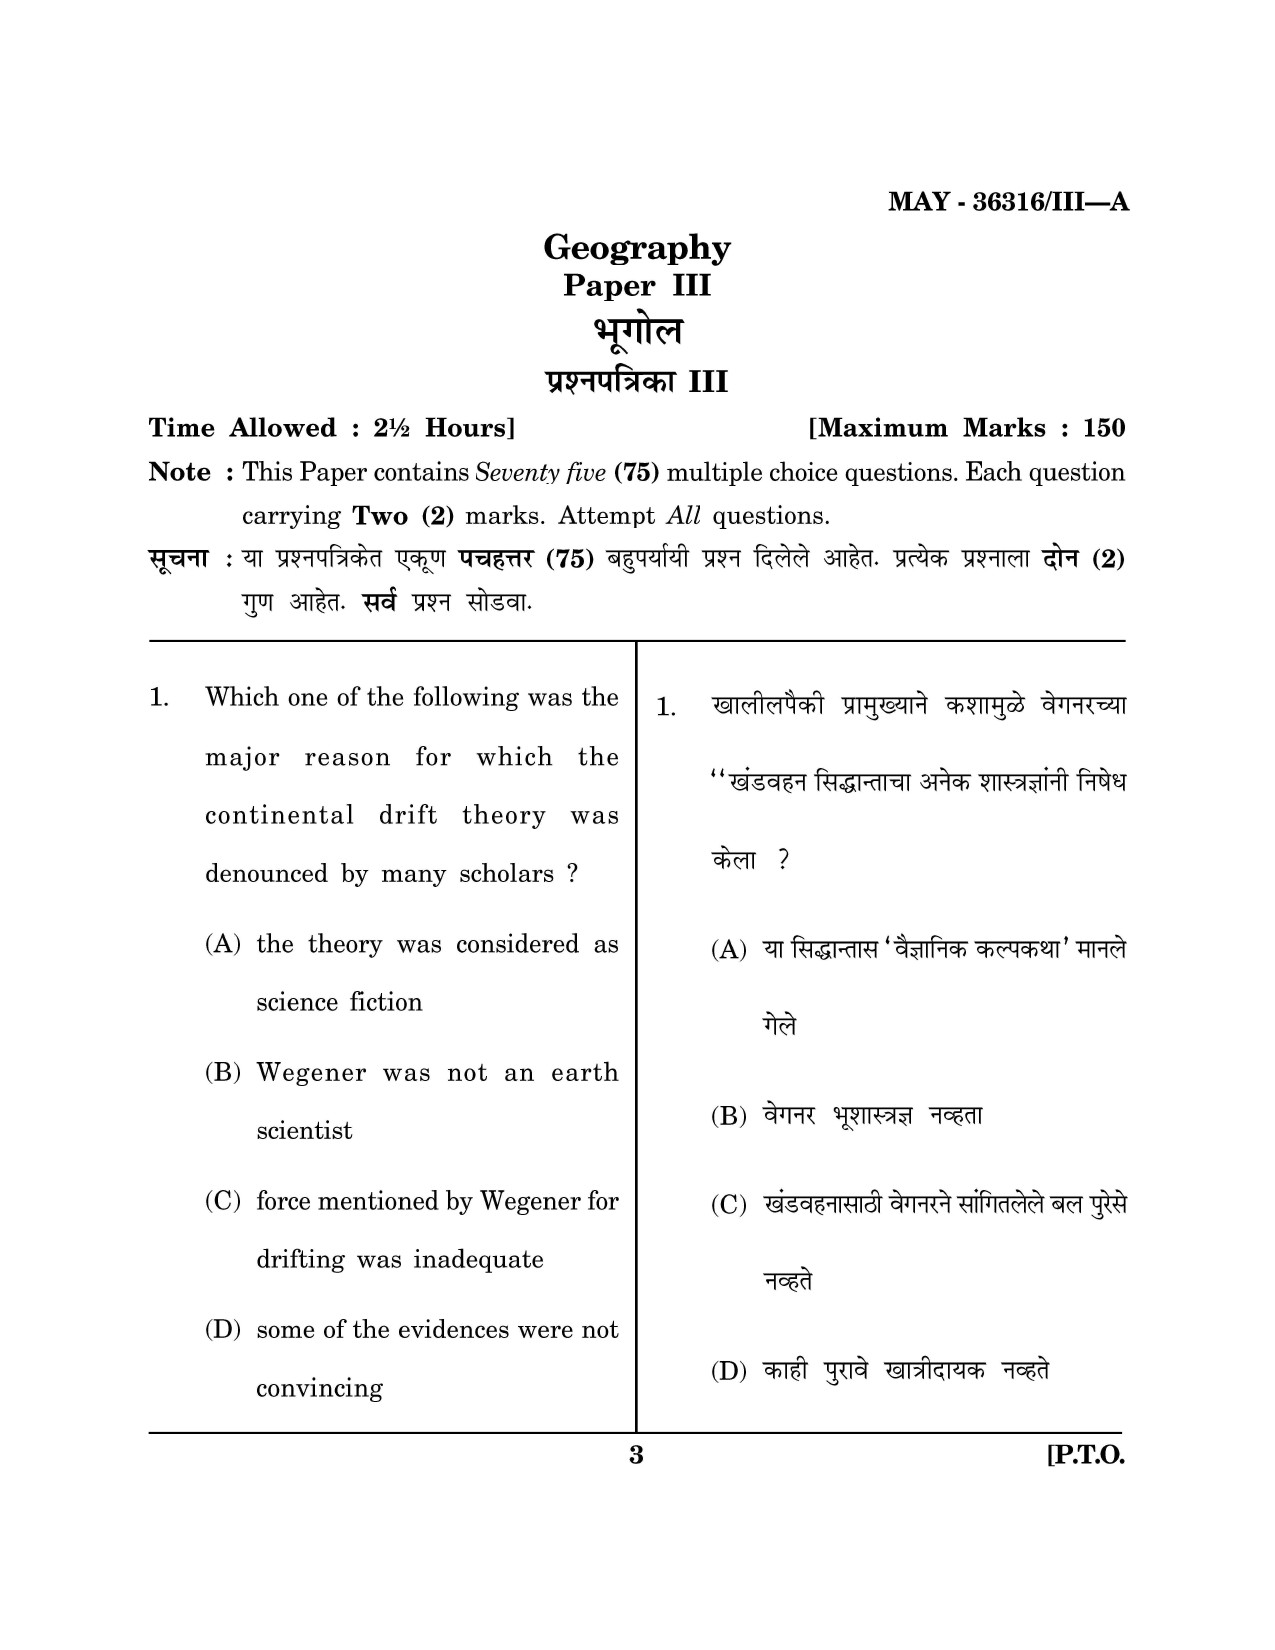 Maharashtra SET Geography Question Paper III May 2016 2